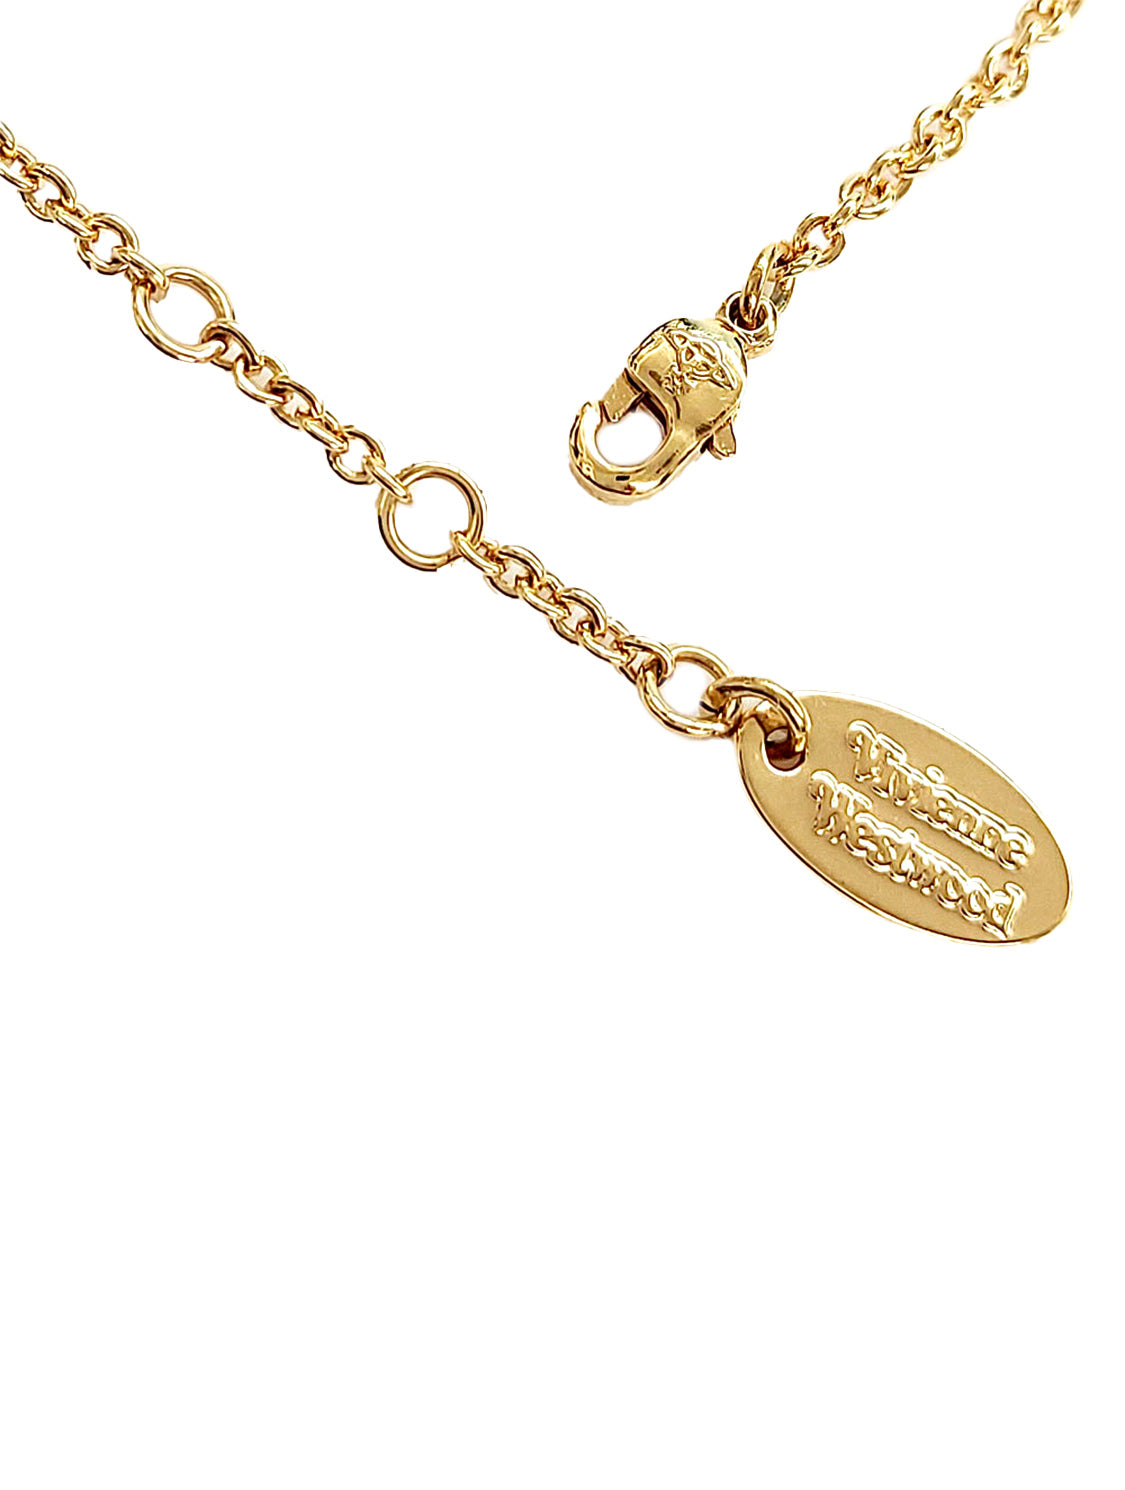 Vivienne Westwood 2000s Gold Orb Chain Bracelet